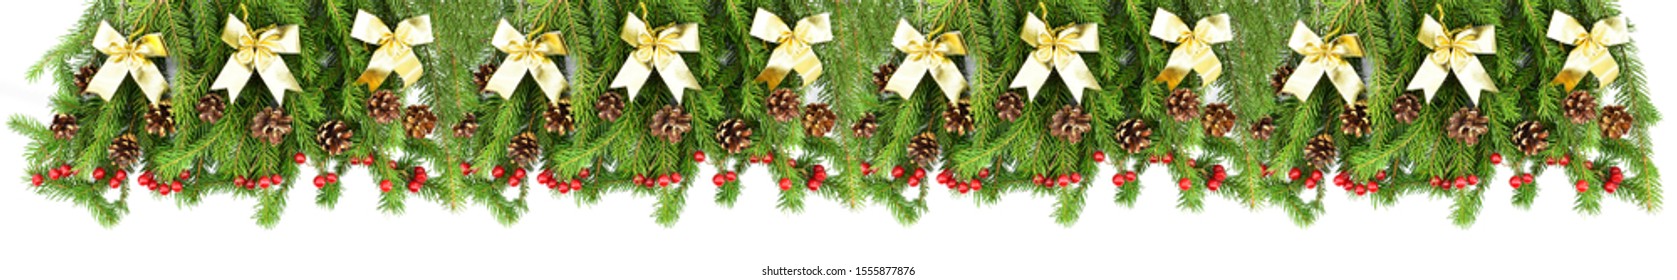 Bordure Weihnachten Stock Photos Images Photography Shutterstock